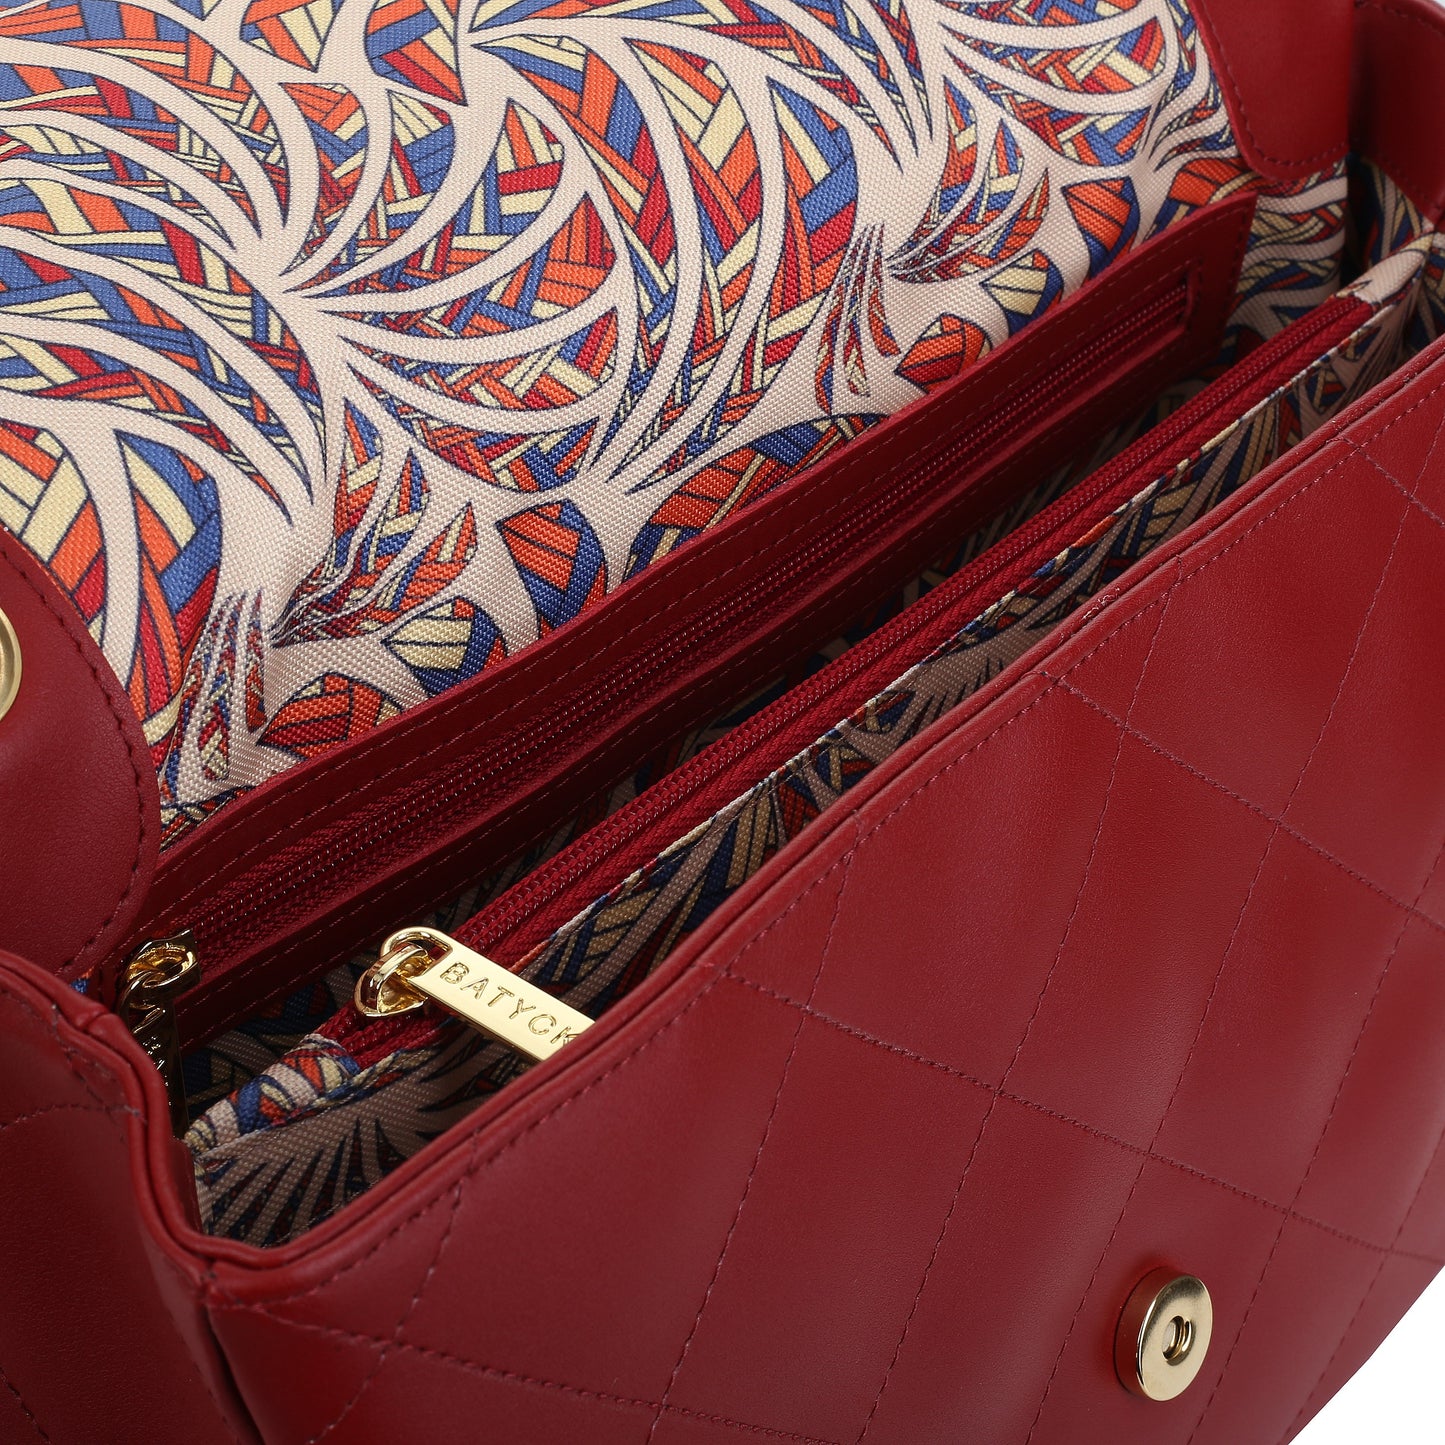 BLANCA NAPA CLARET women's leather handbag